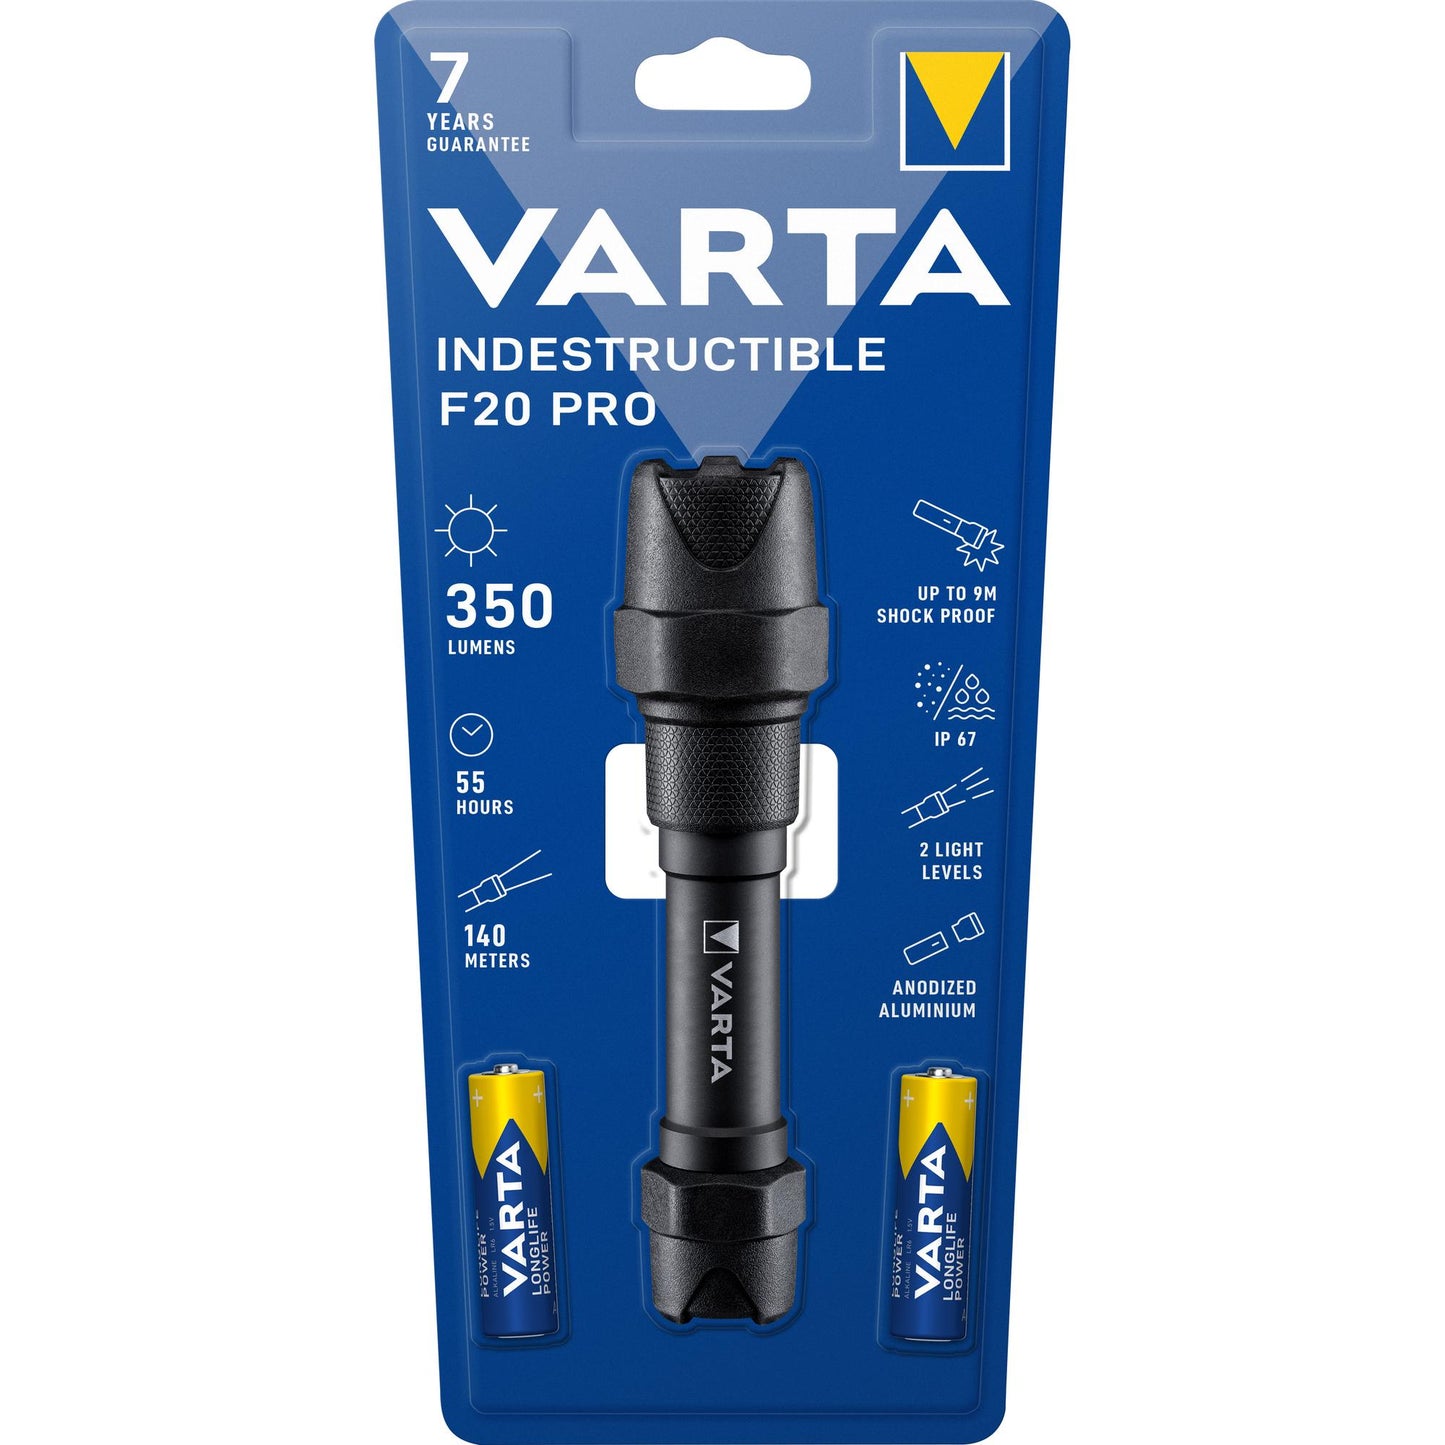 VARTA LED Taschenlampe Indestructible F20 Pro, 350lm inkl. 2x AA Alkaline Batterie Retail Blister